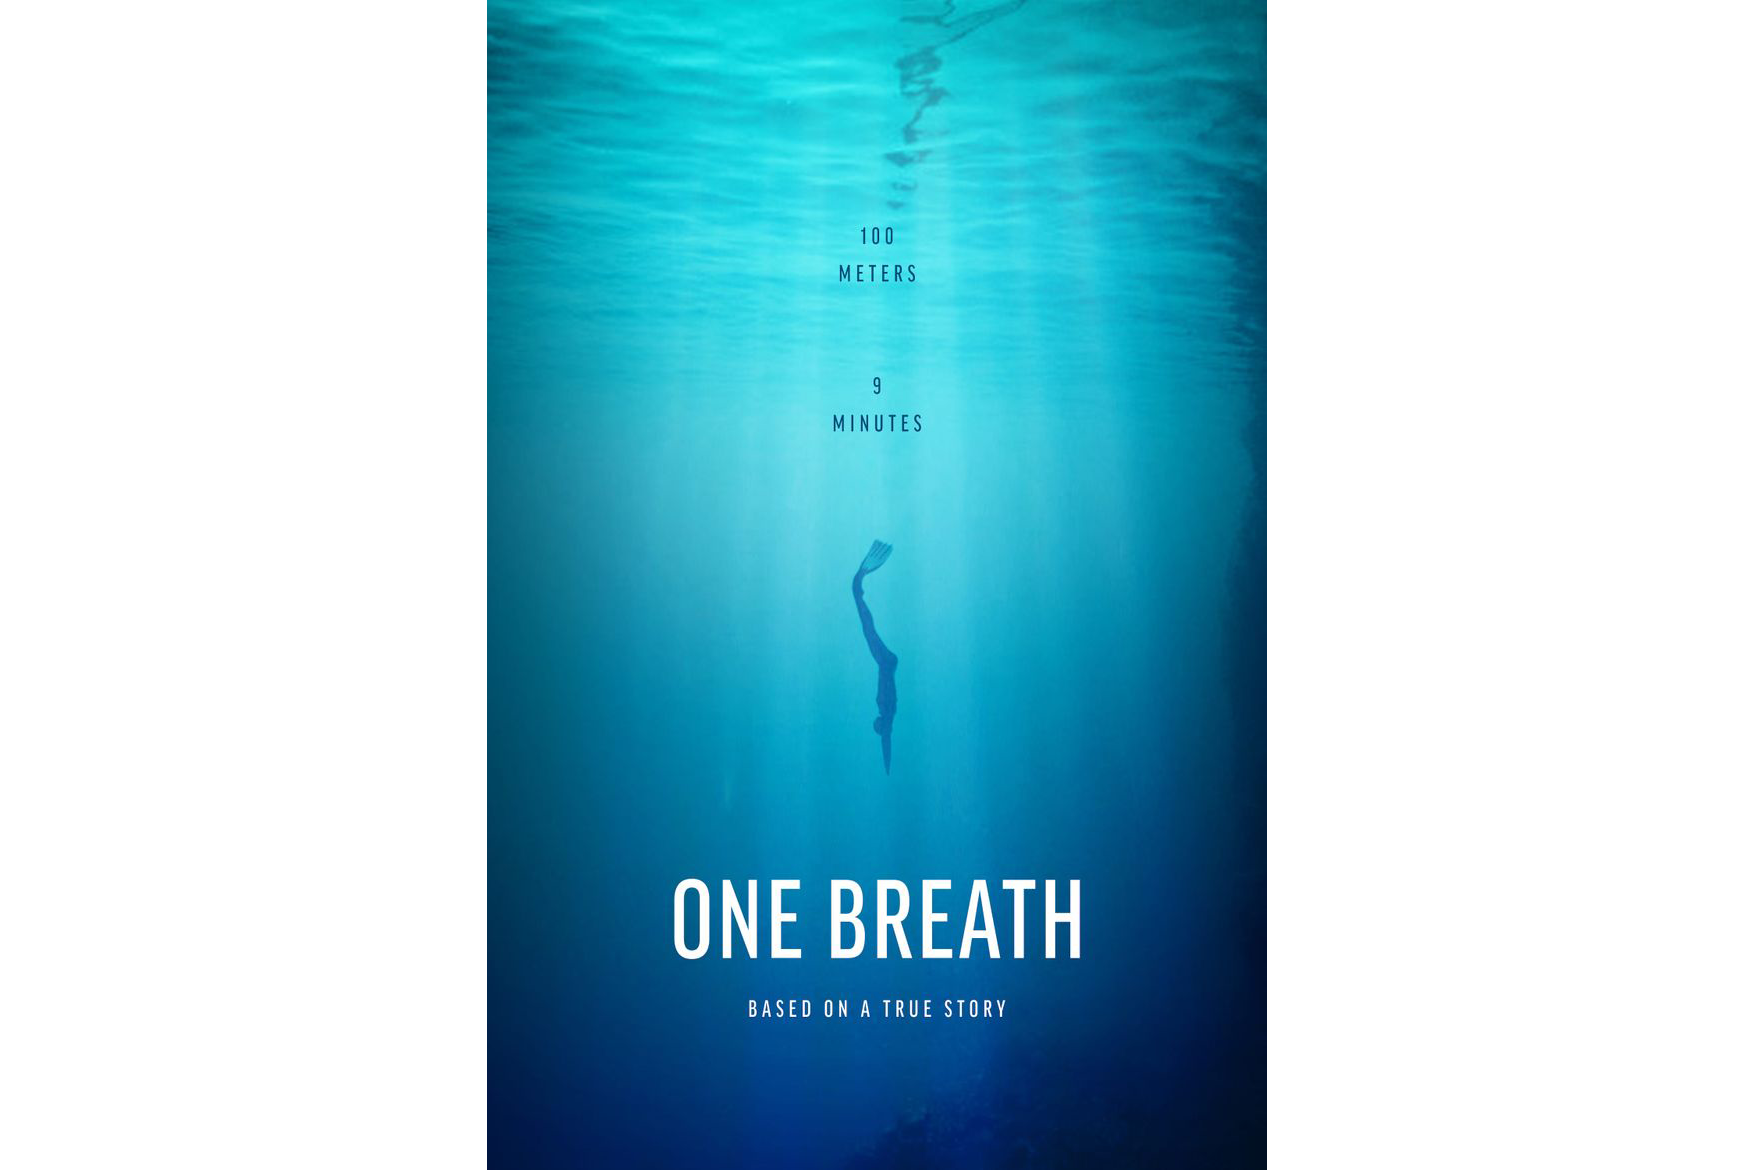 Movie "One Breath" - A tribute to the life of Natalia Molchanova